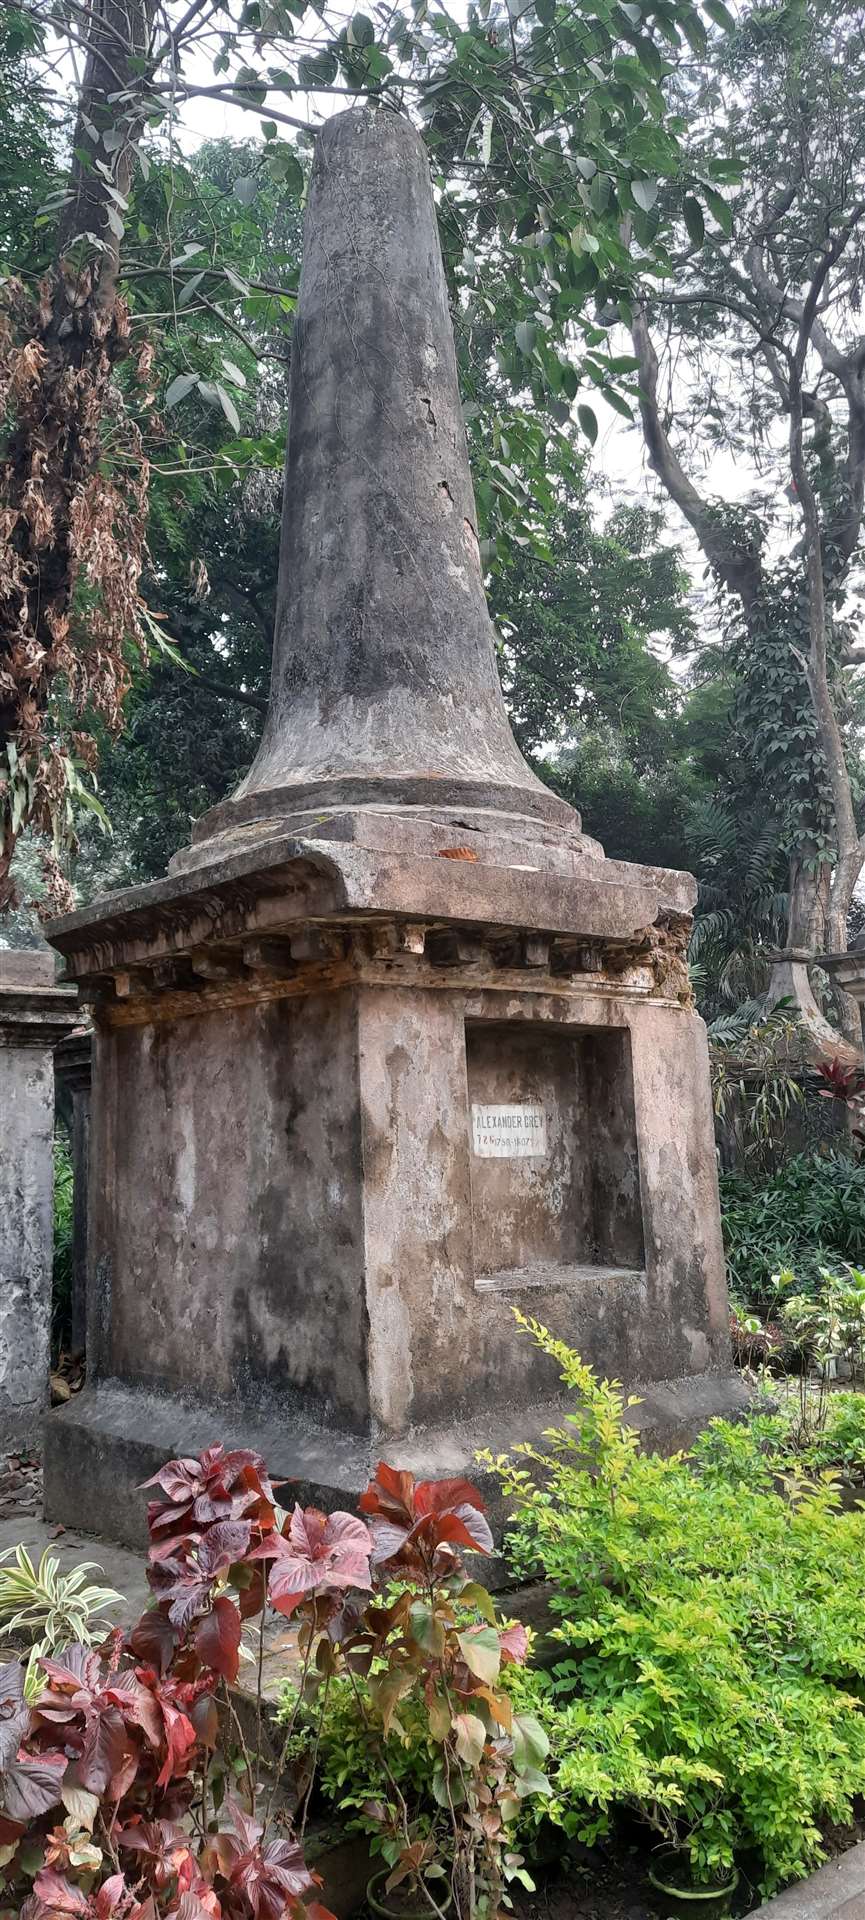 The grave of Moray's Dr Alexander Gray in the South Park Street cemetery, in Kolkata.